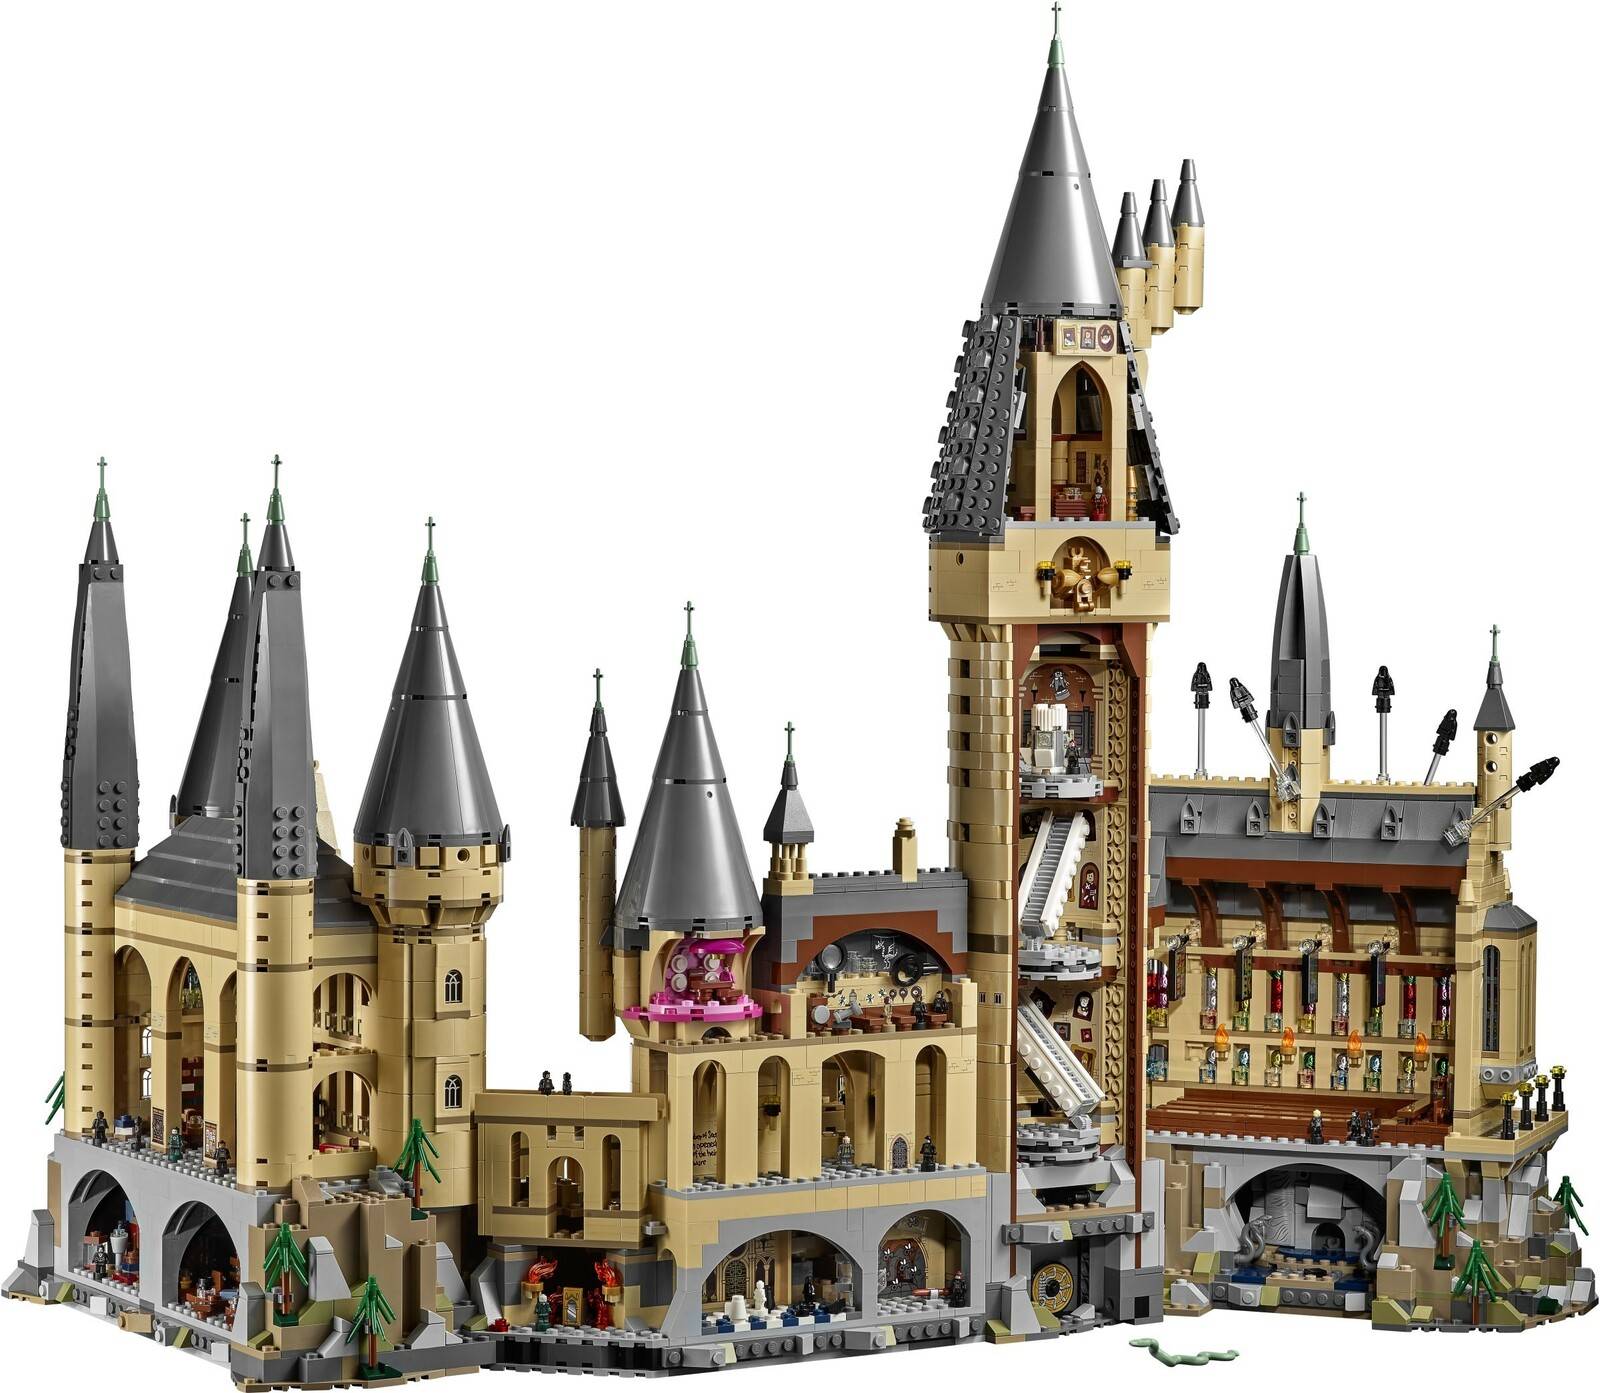 LEGO Hogwarts Castle 71043 set: The Detailed Review